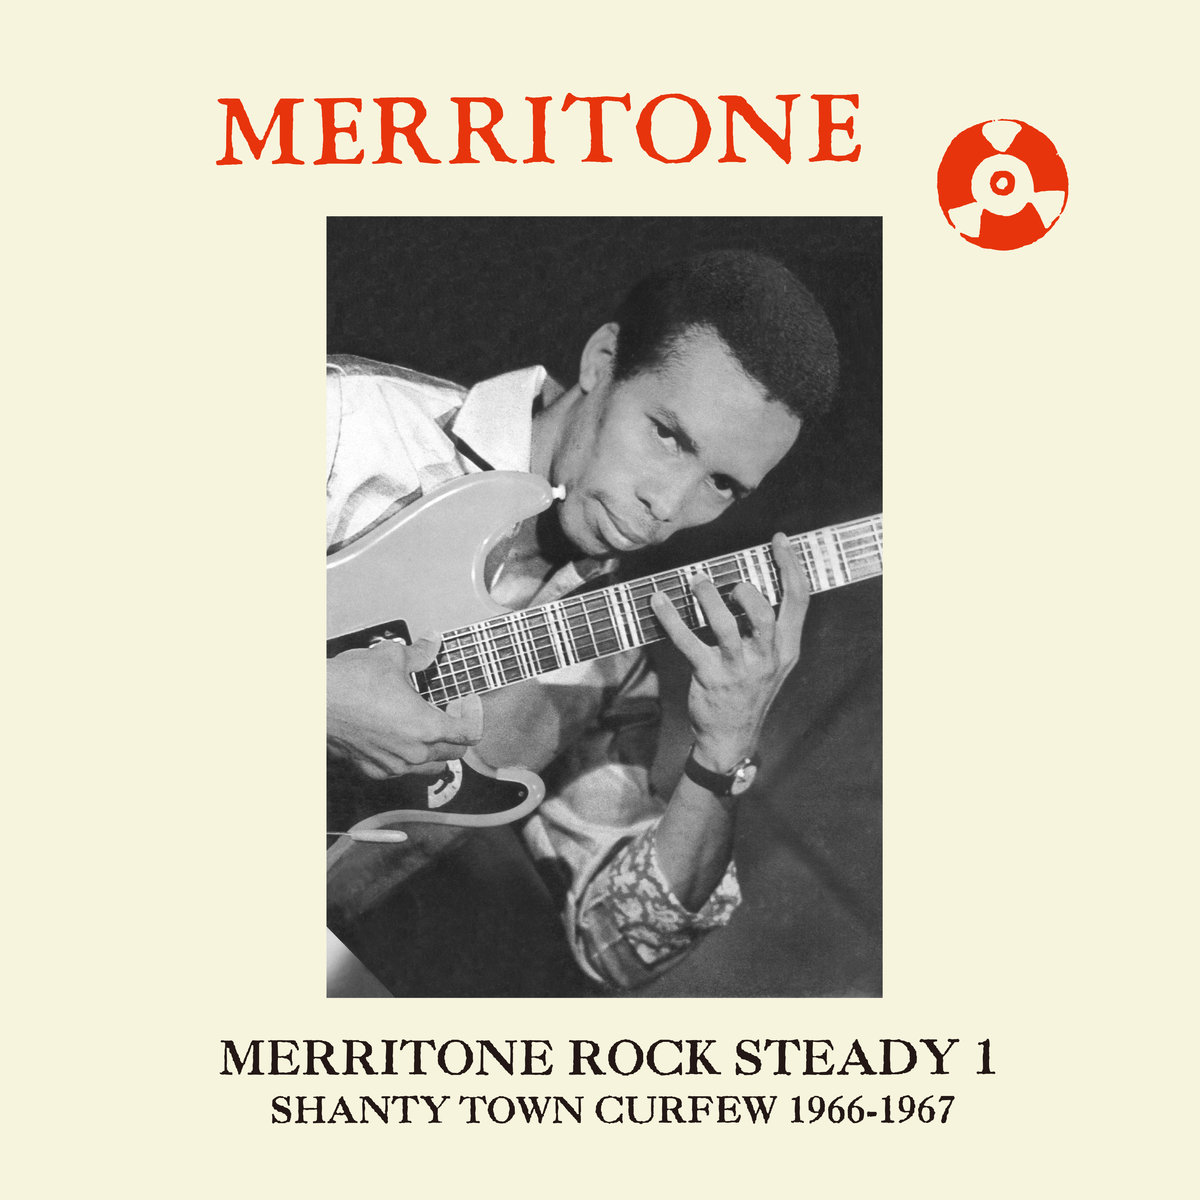 VA - Merritone Rock Steady 1 Shanty Town Curfew 1966-1967 (DOLP)